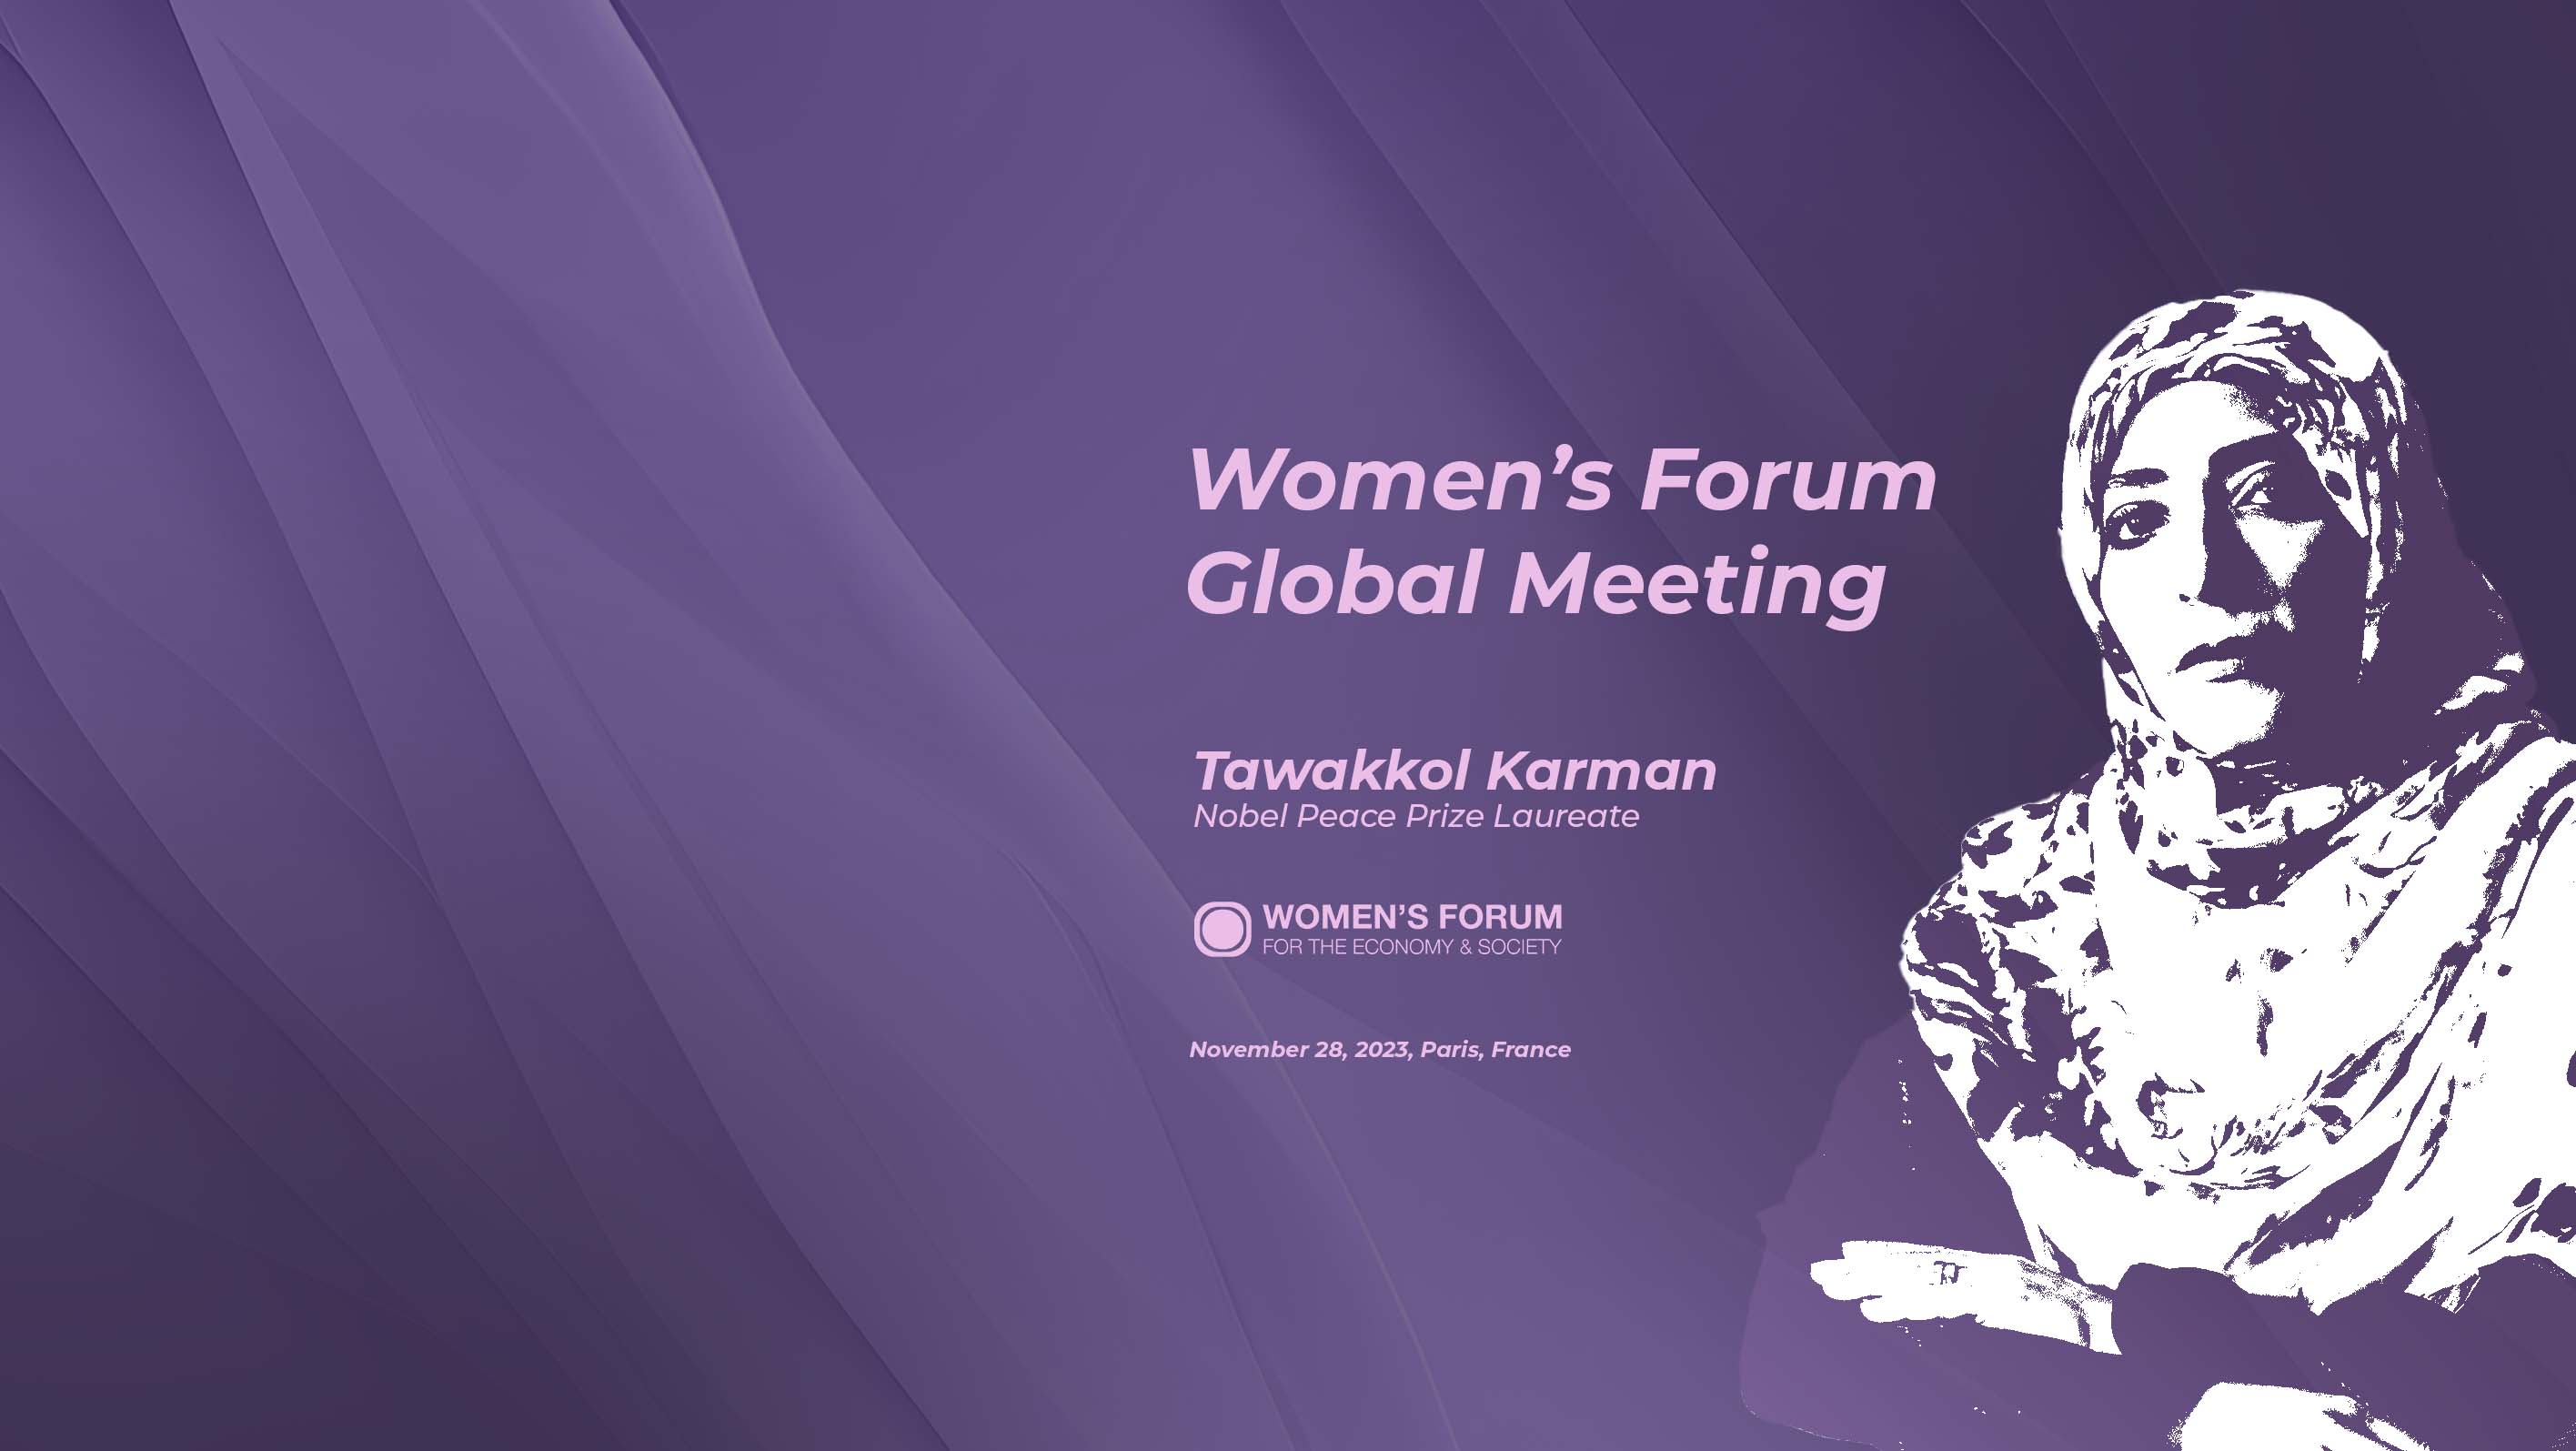 Tawakkol Karman to deliver inspirational keynote address at Women's Forum Global Meeting 2023